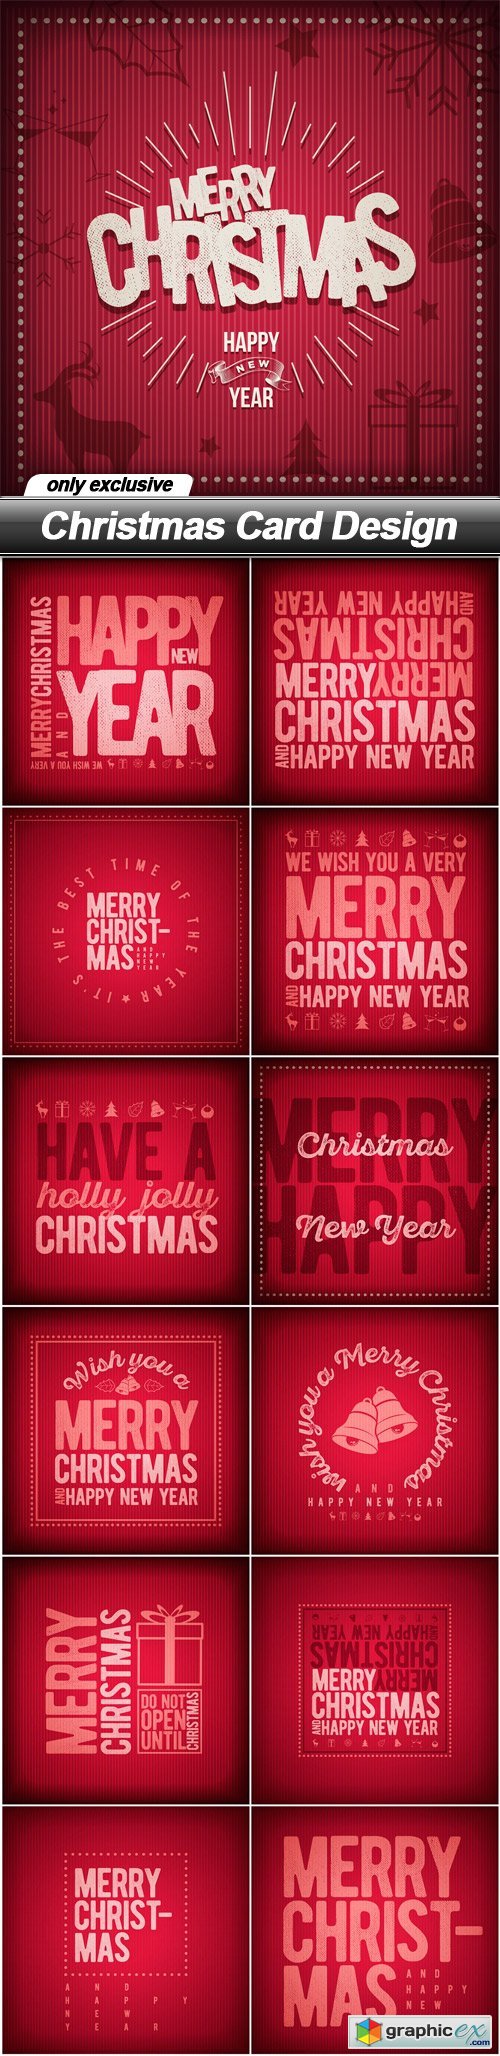 Christmas Card Design - 13 EPS